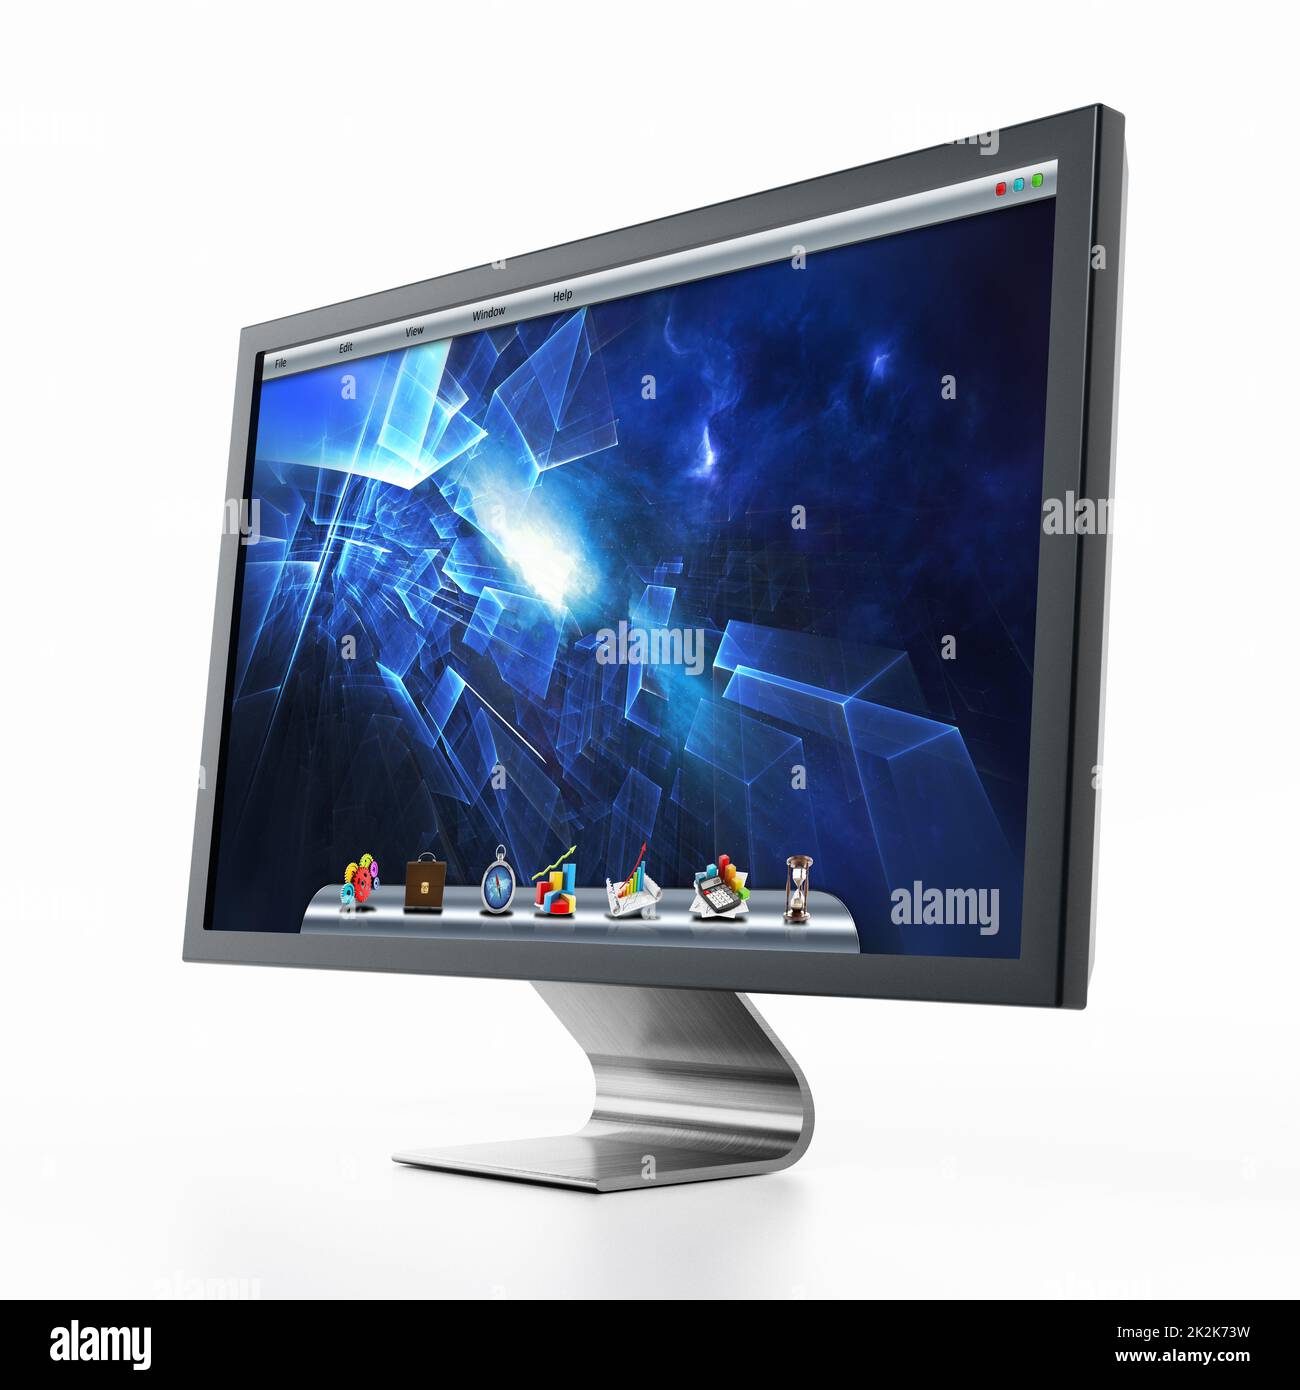 Computer desktop wallpaper hi-res stock photography and images - Alamy